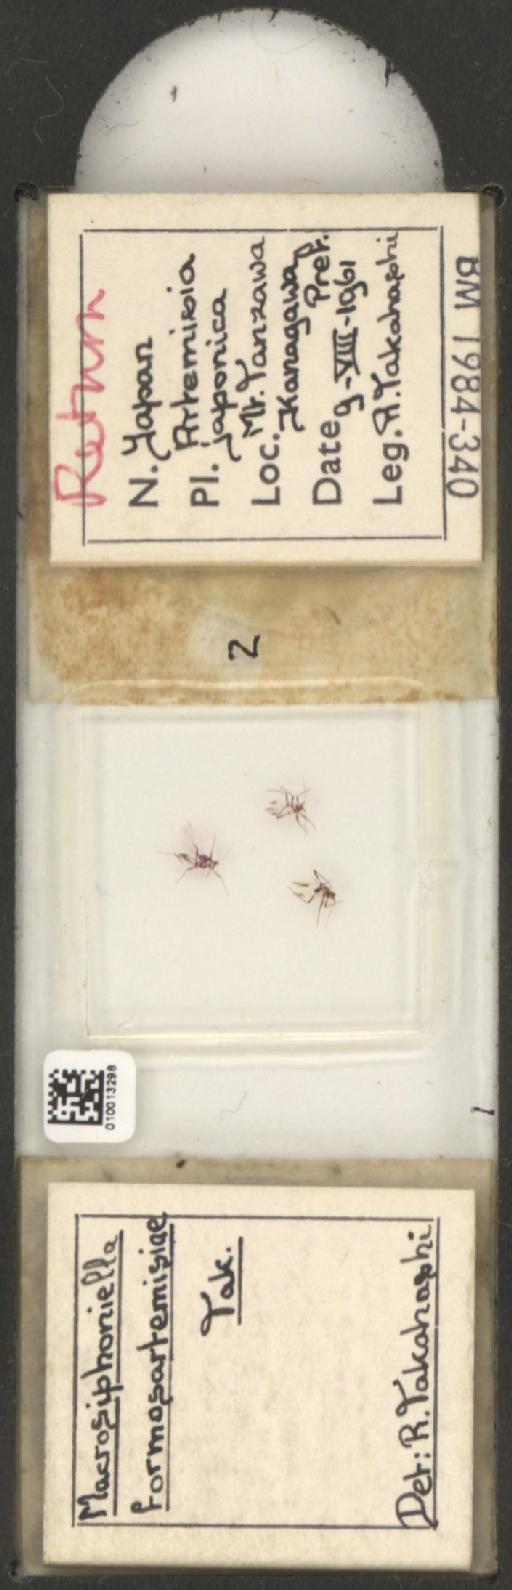 Macrosiphoniella formosartemisiae Takahashi, 1921 - 010013298_112660_1094721